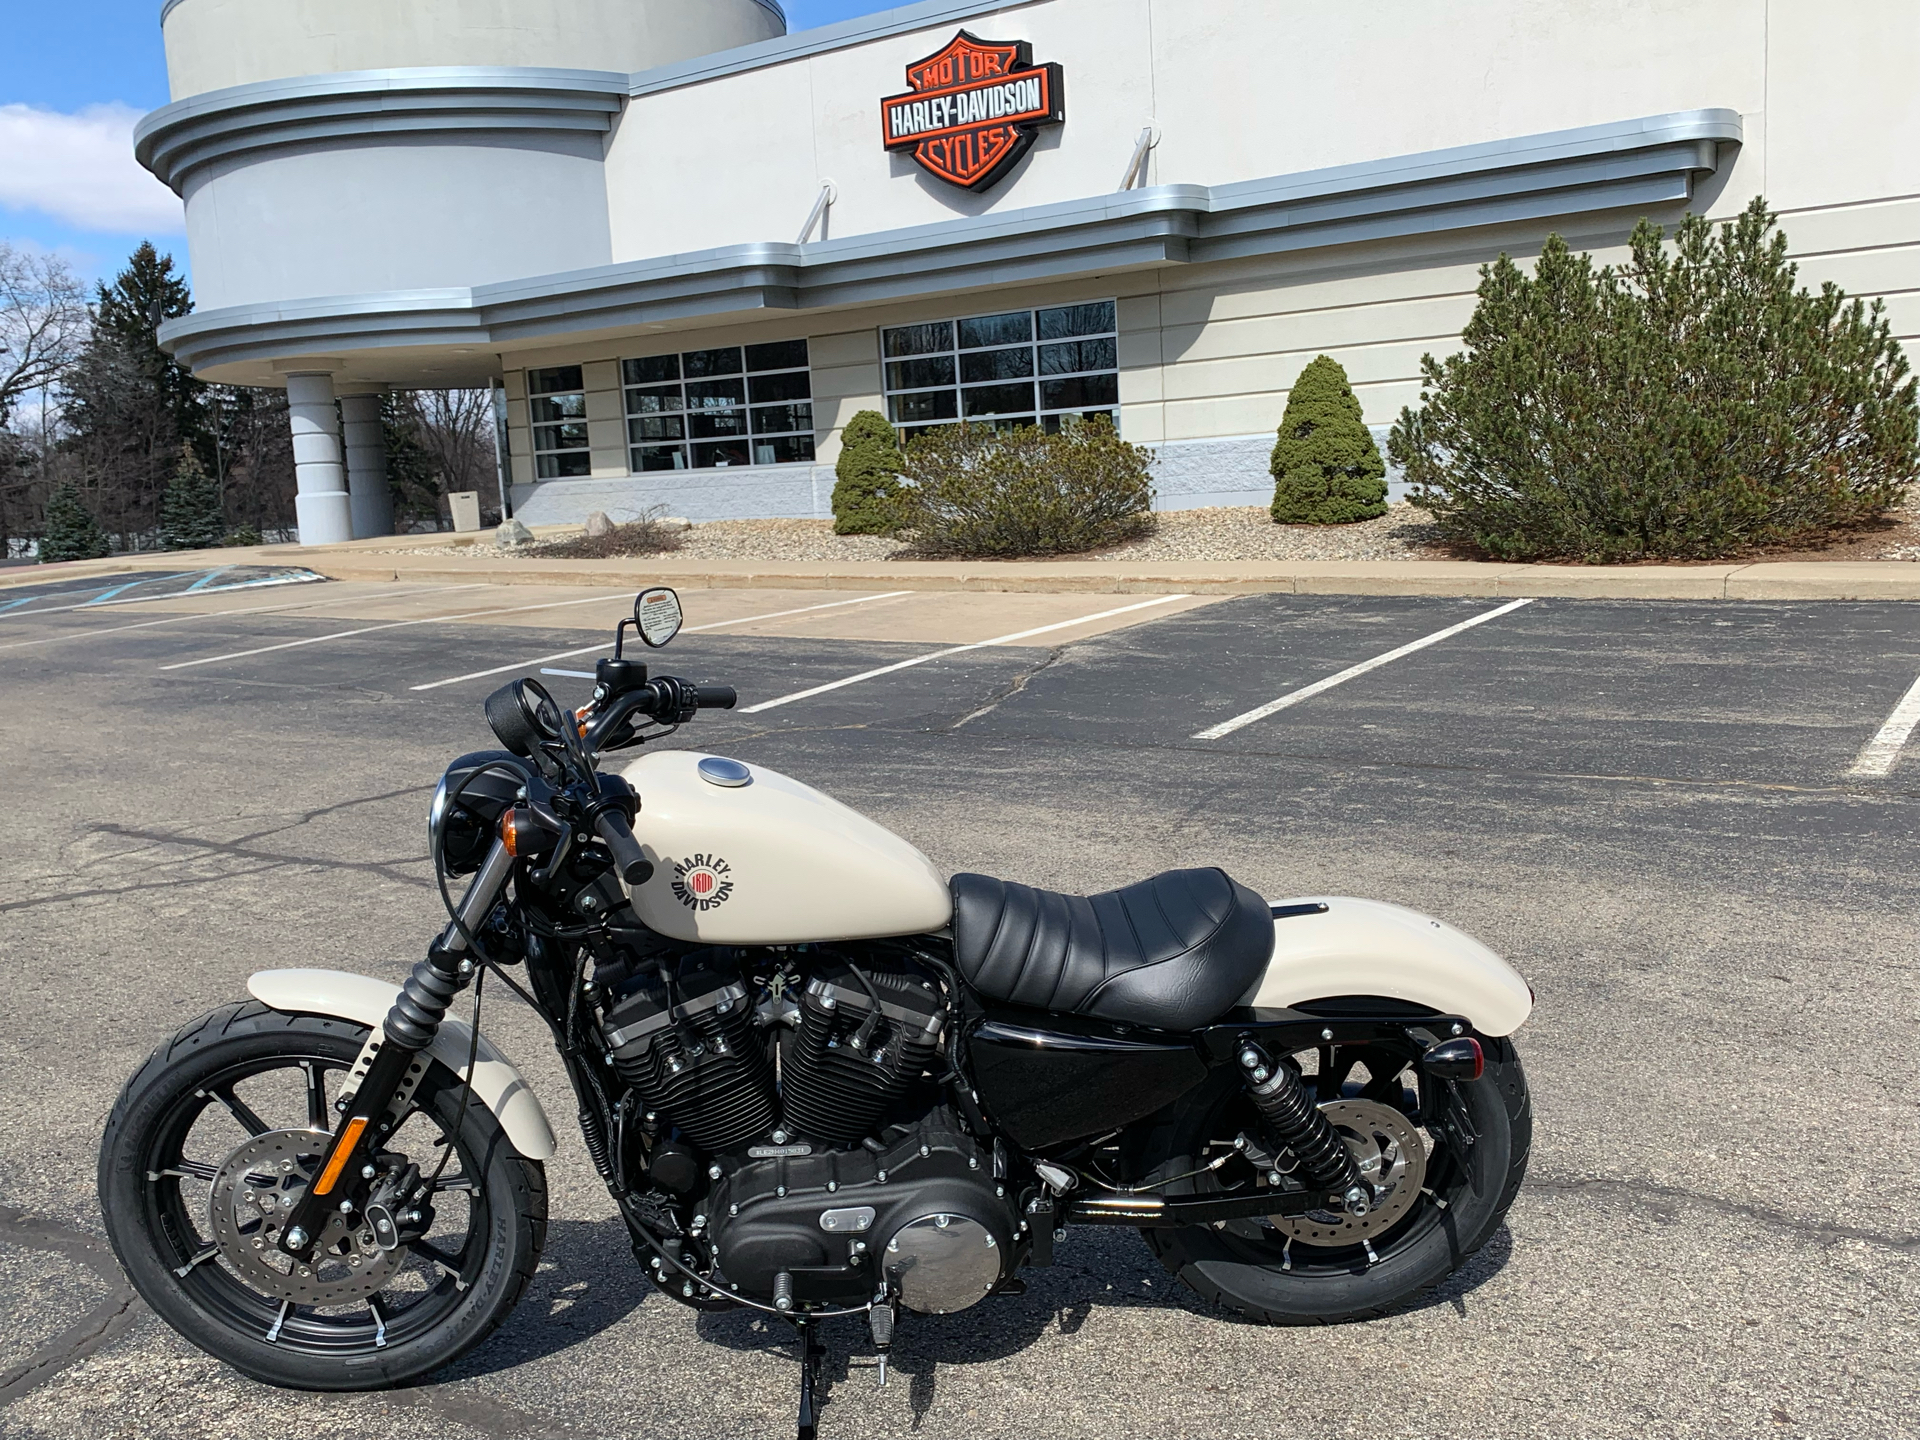 2022 Harley-Davidson Iron 883™ in Portage, Michigan - Photo 16